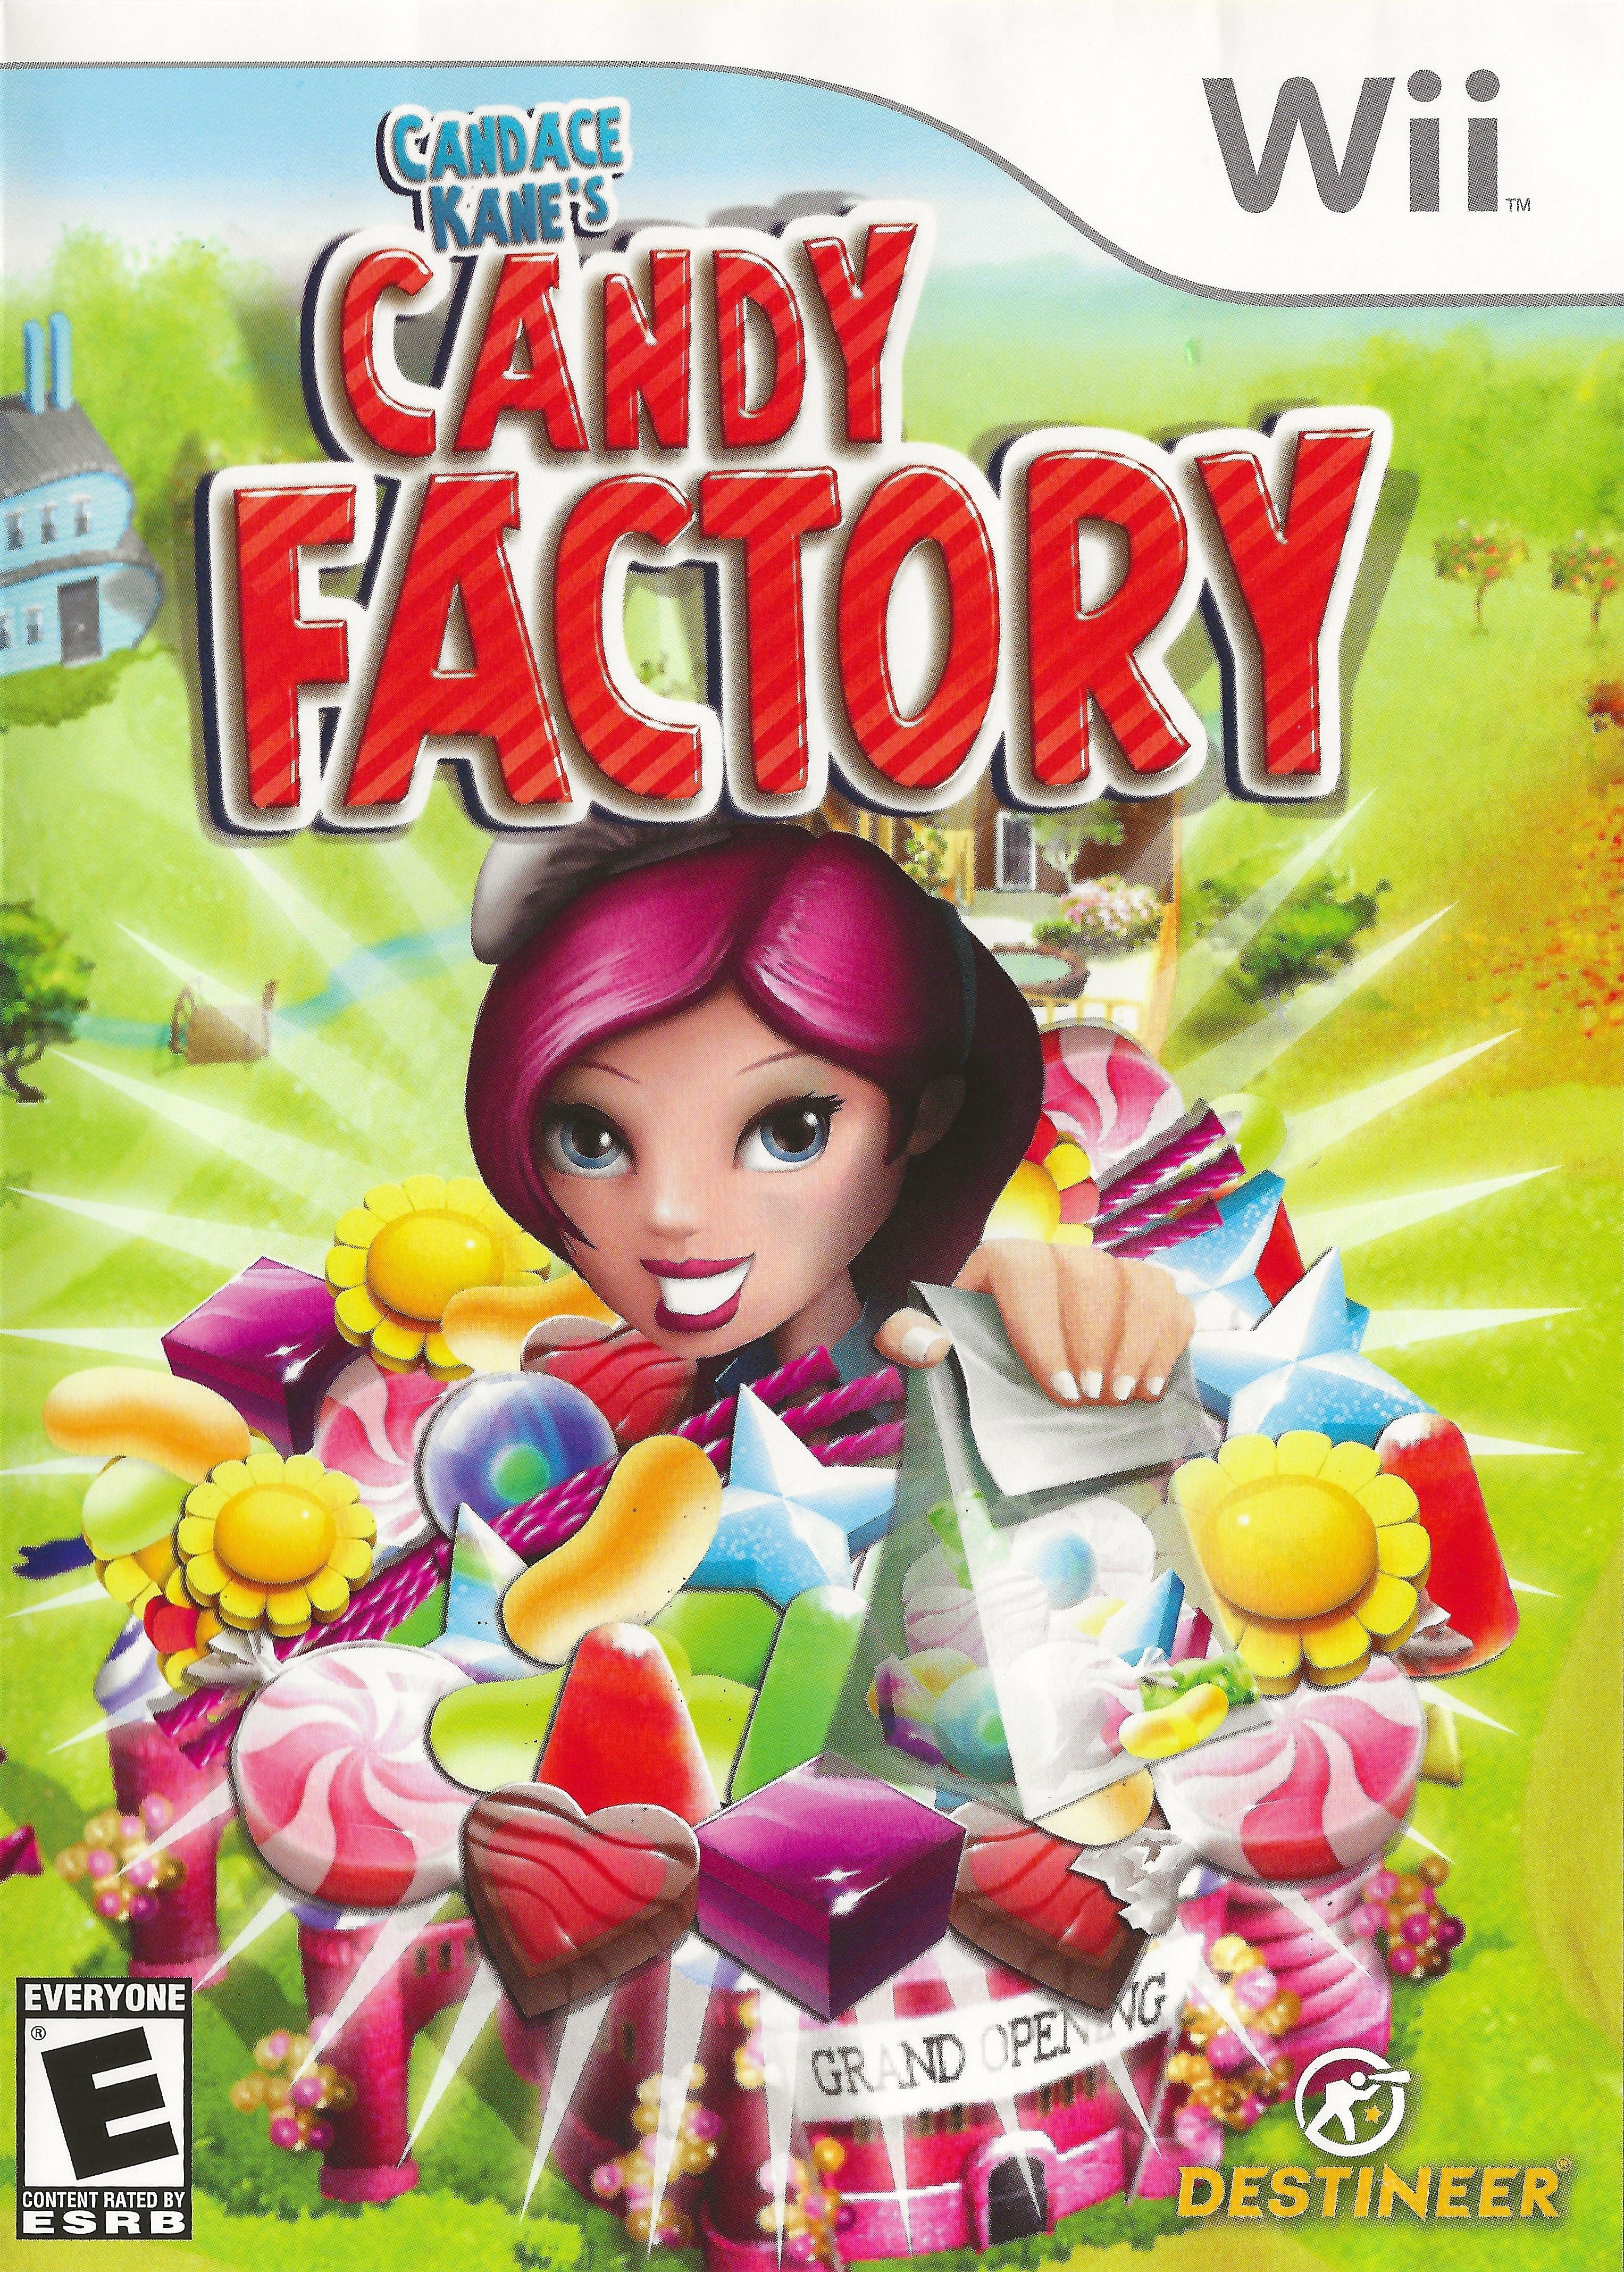 'Candace Kane's: Candy Factory'